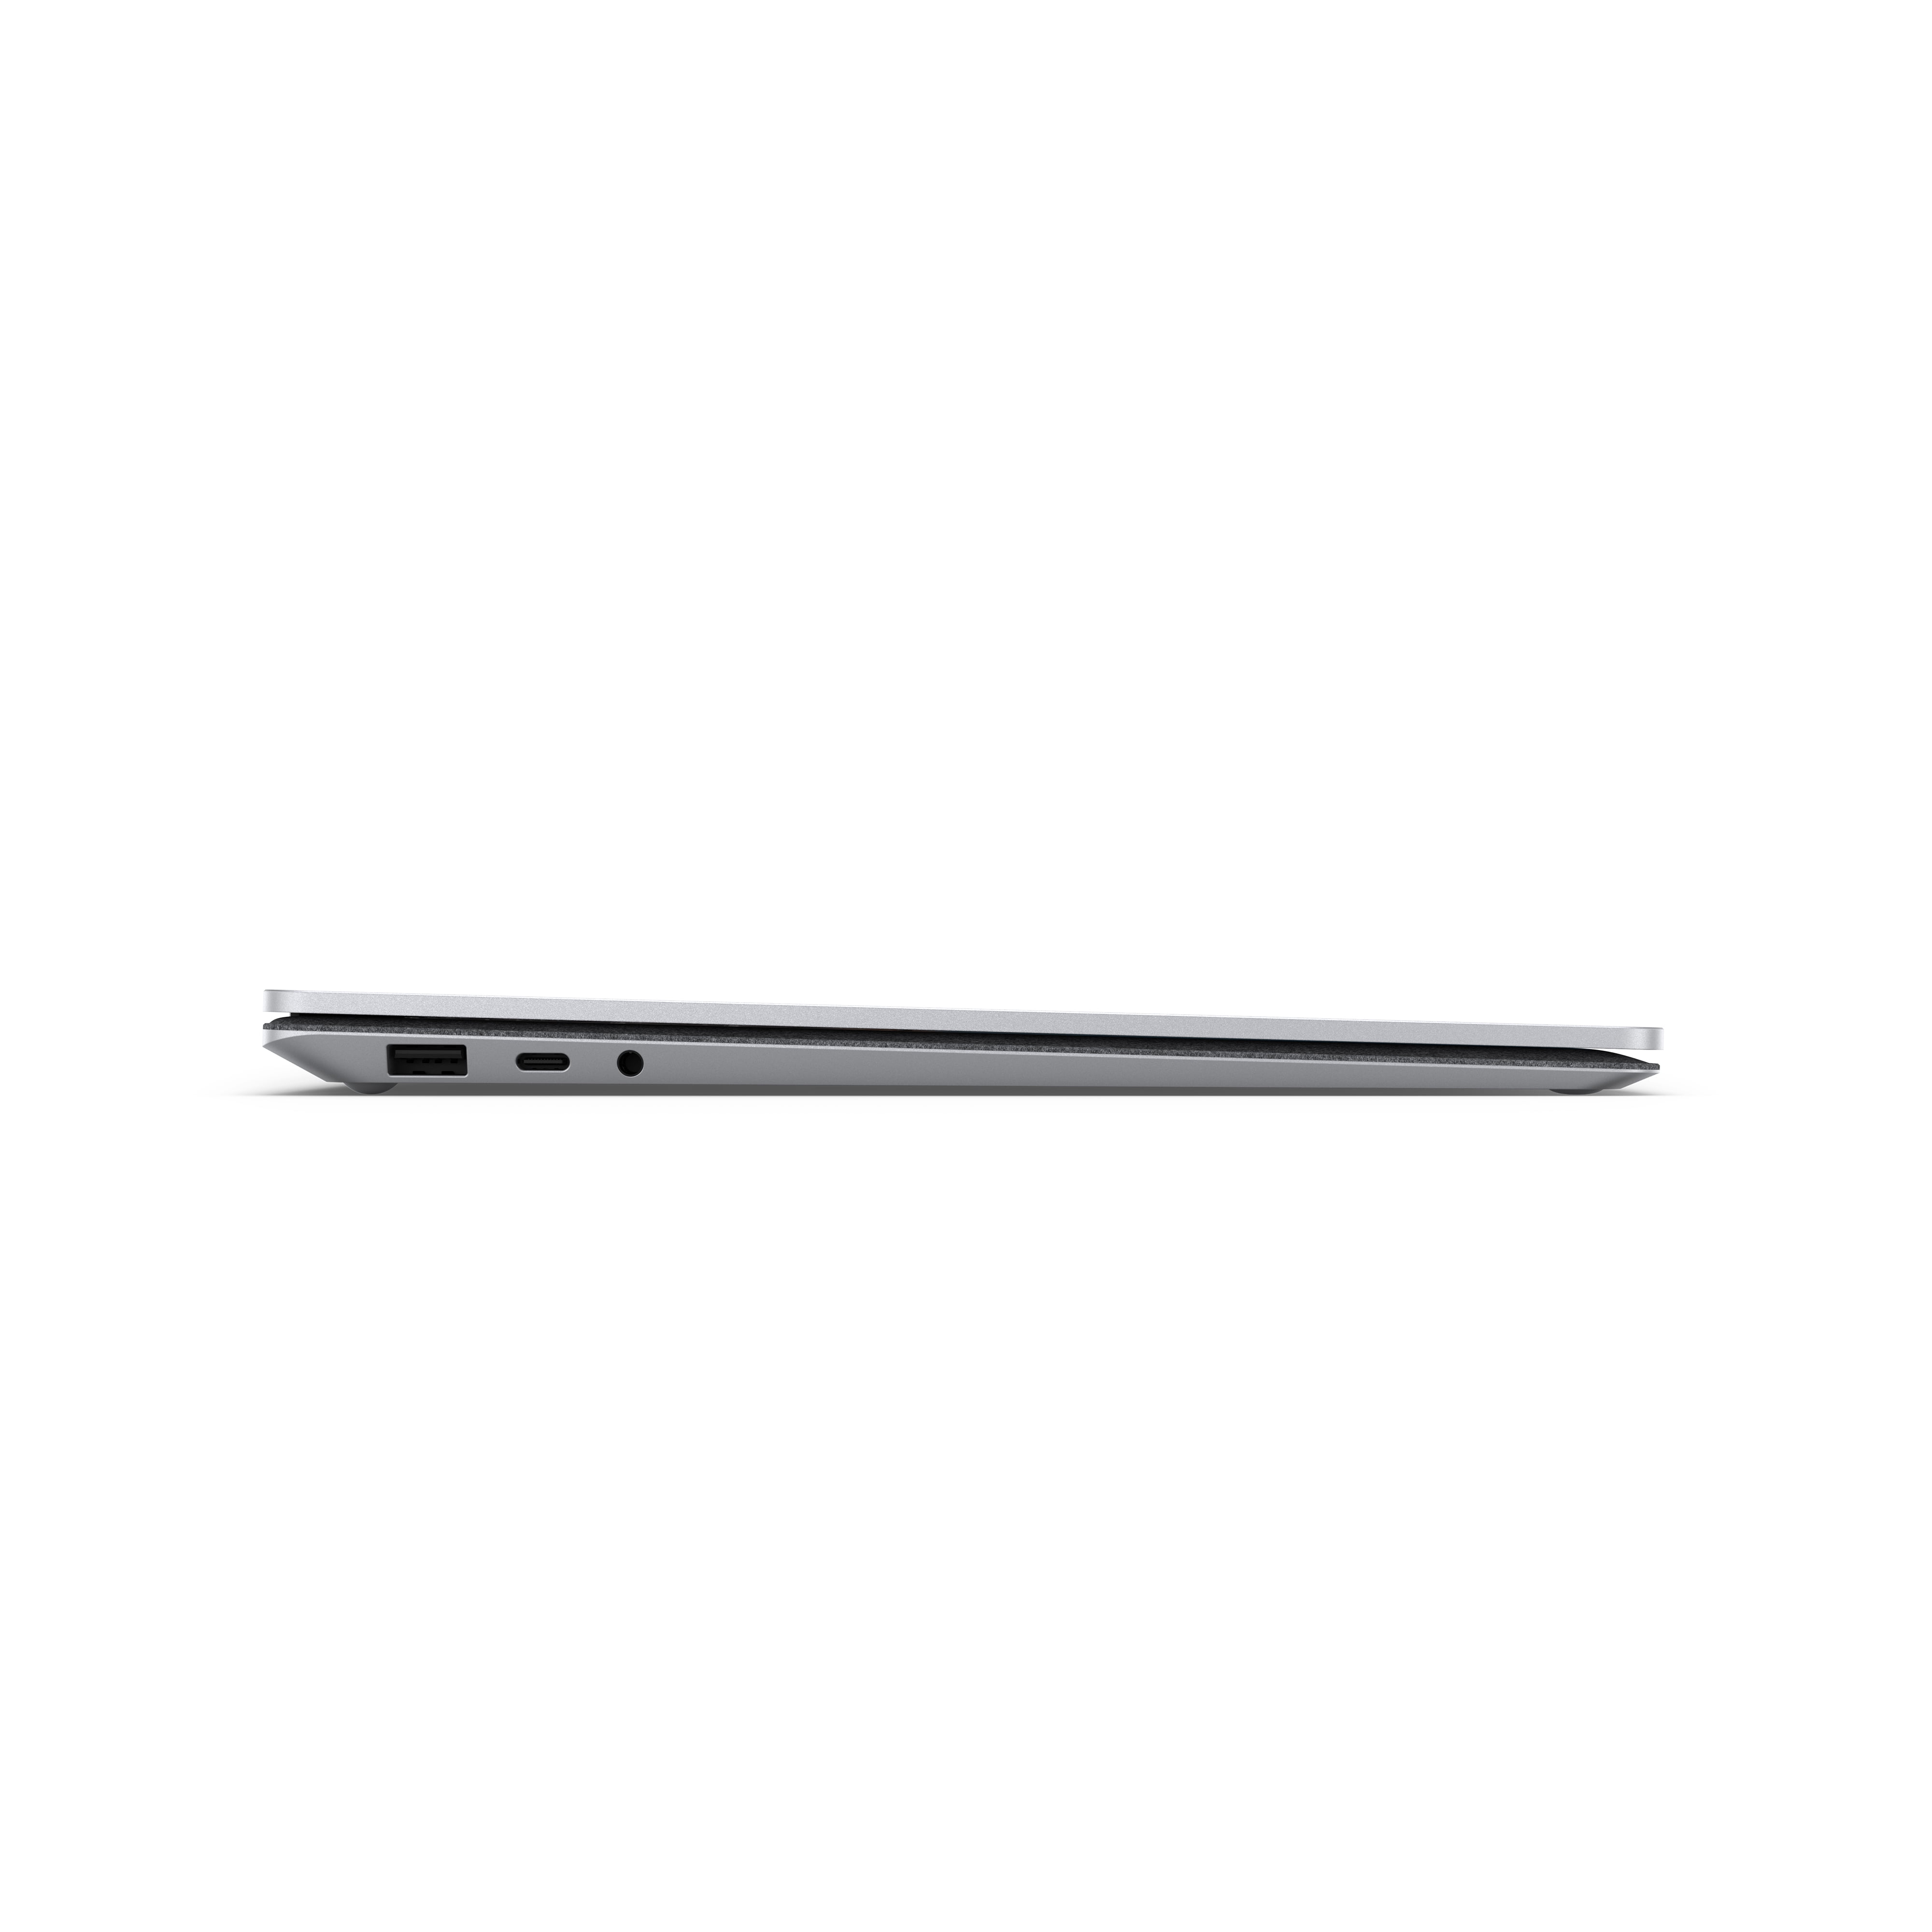 Microsoft - Surface Laptop 4 13.5” Touch-Screen – AMD Ryzen 5